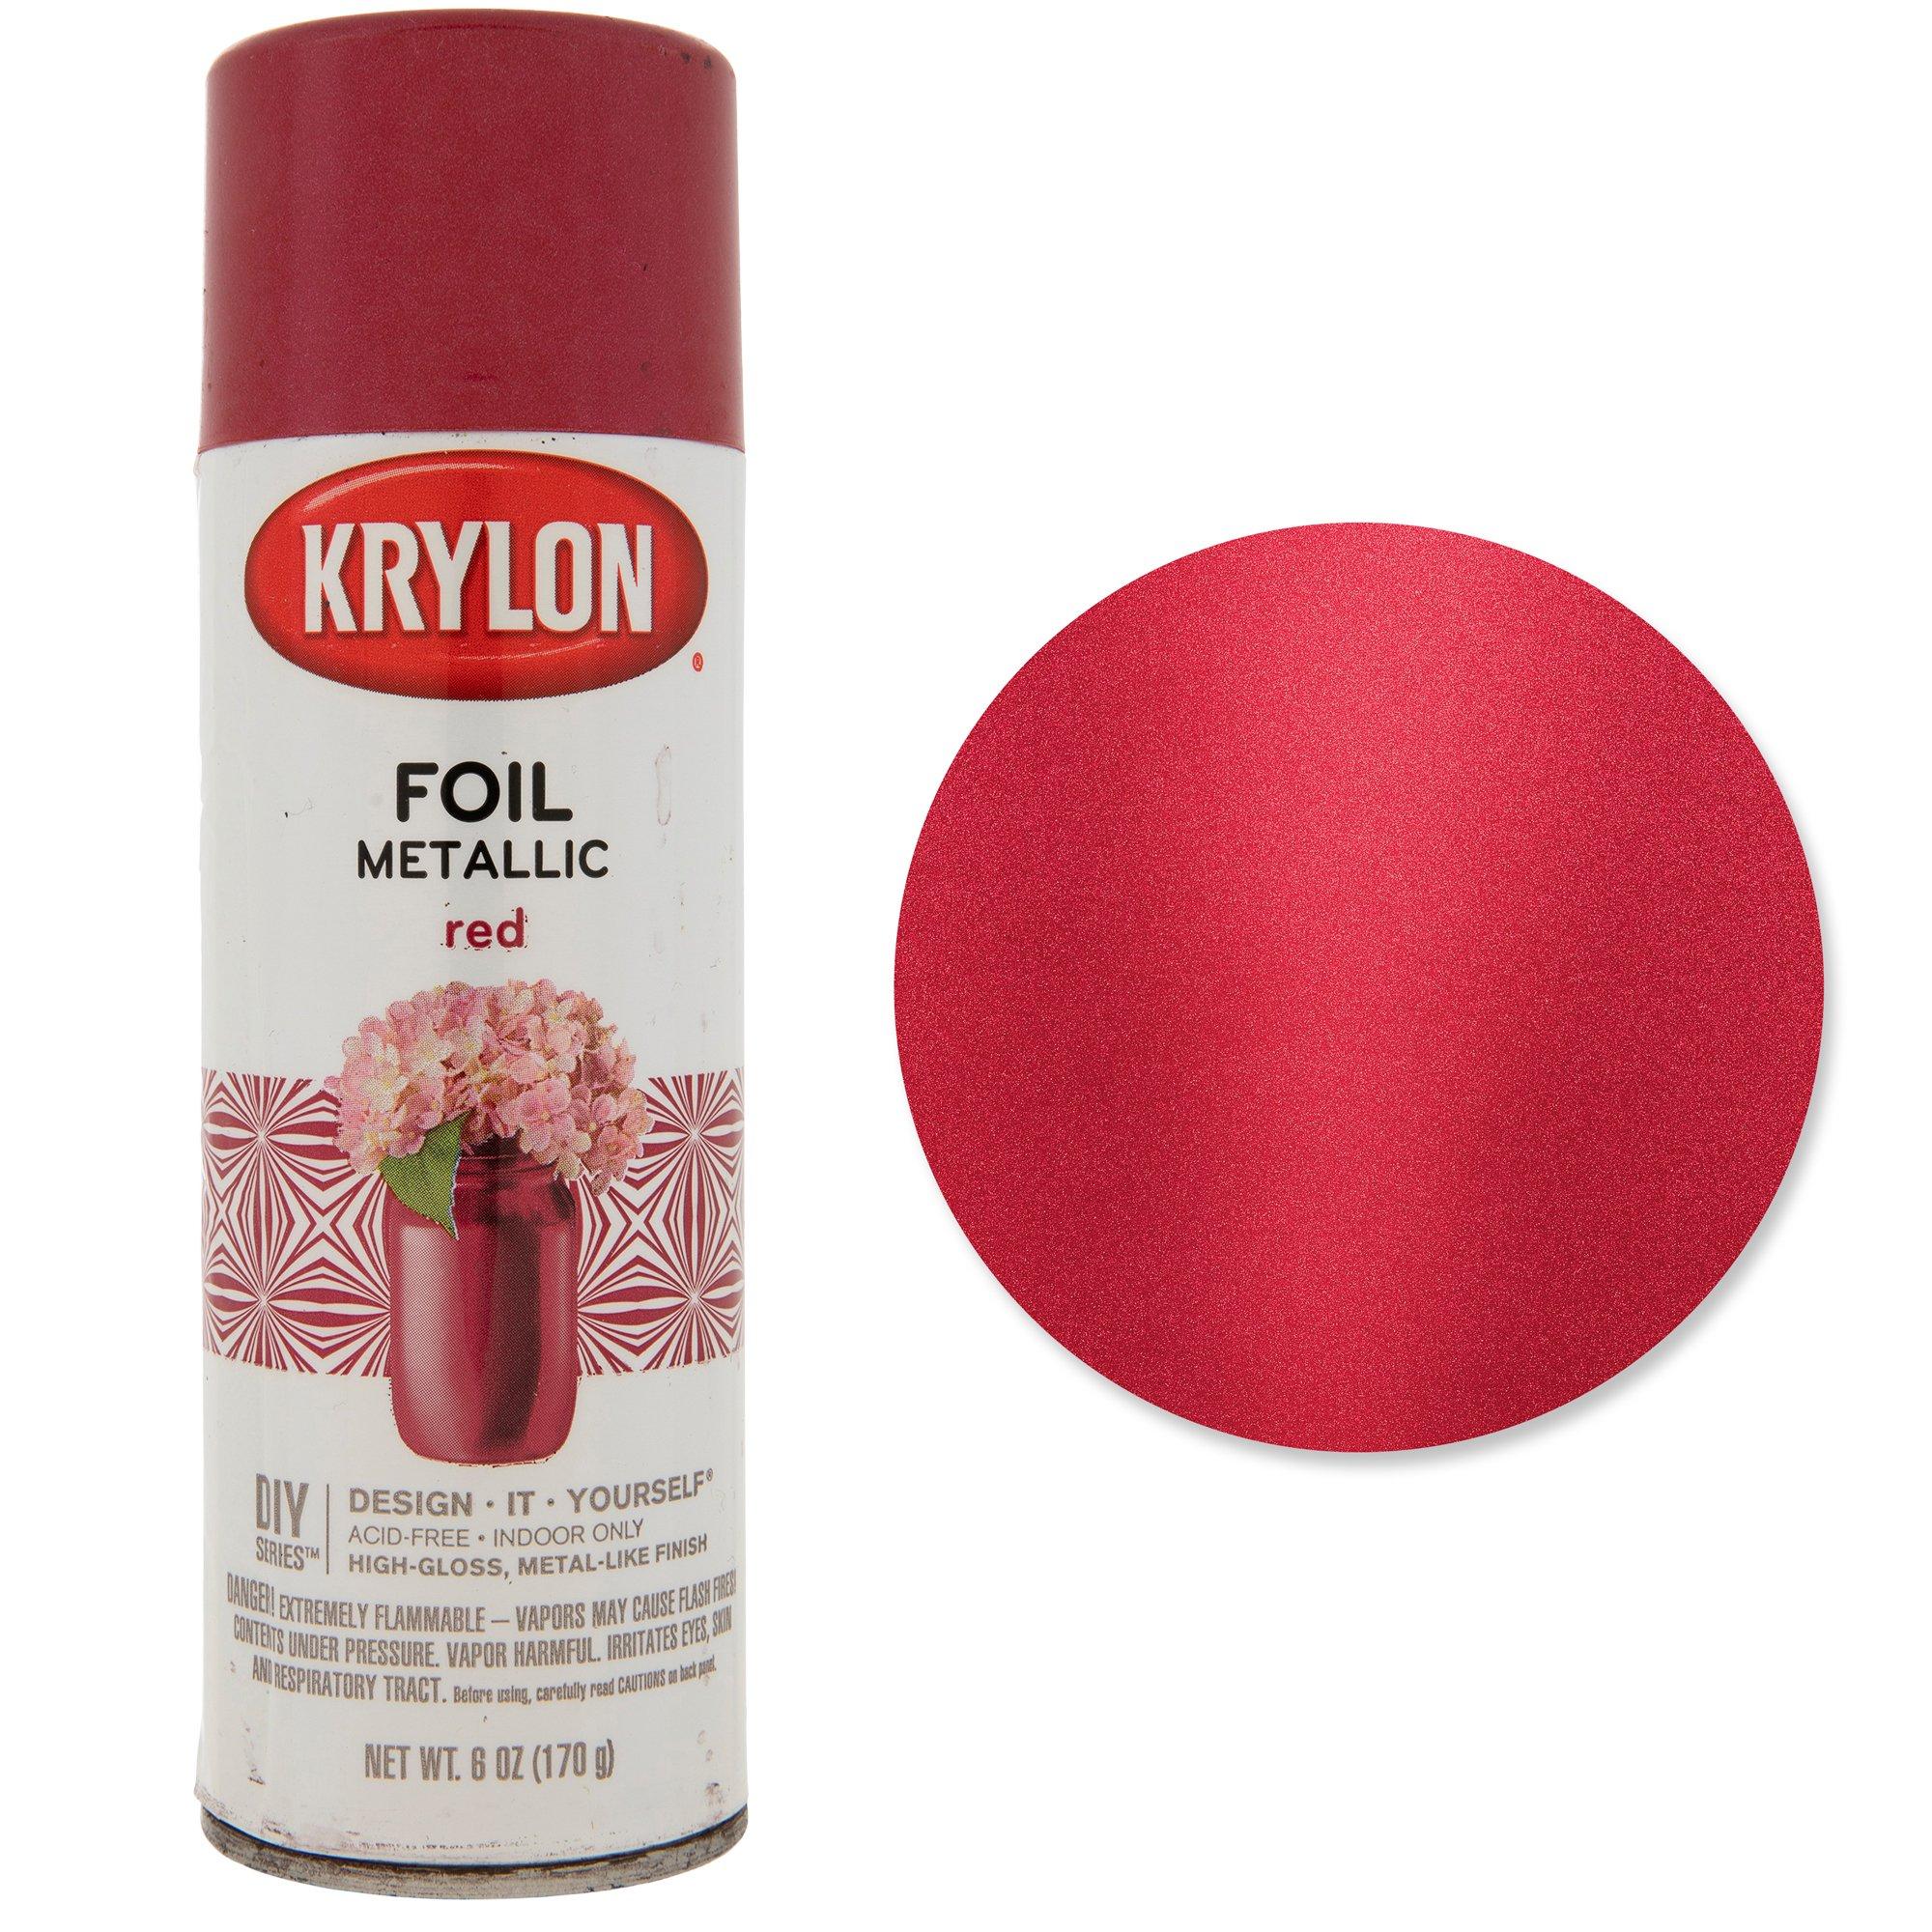 Krylon Coarse Texture Spray Paint, Hobby Lobby